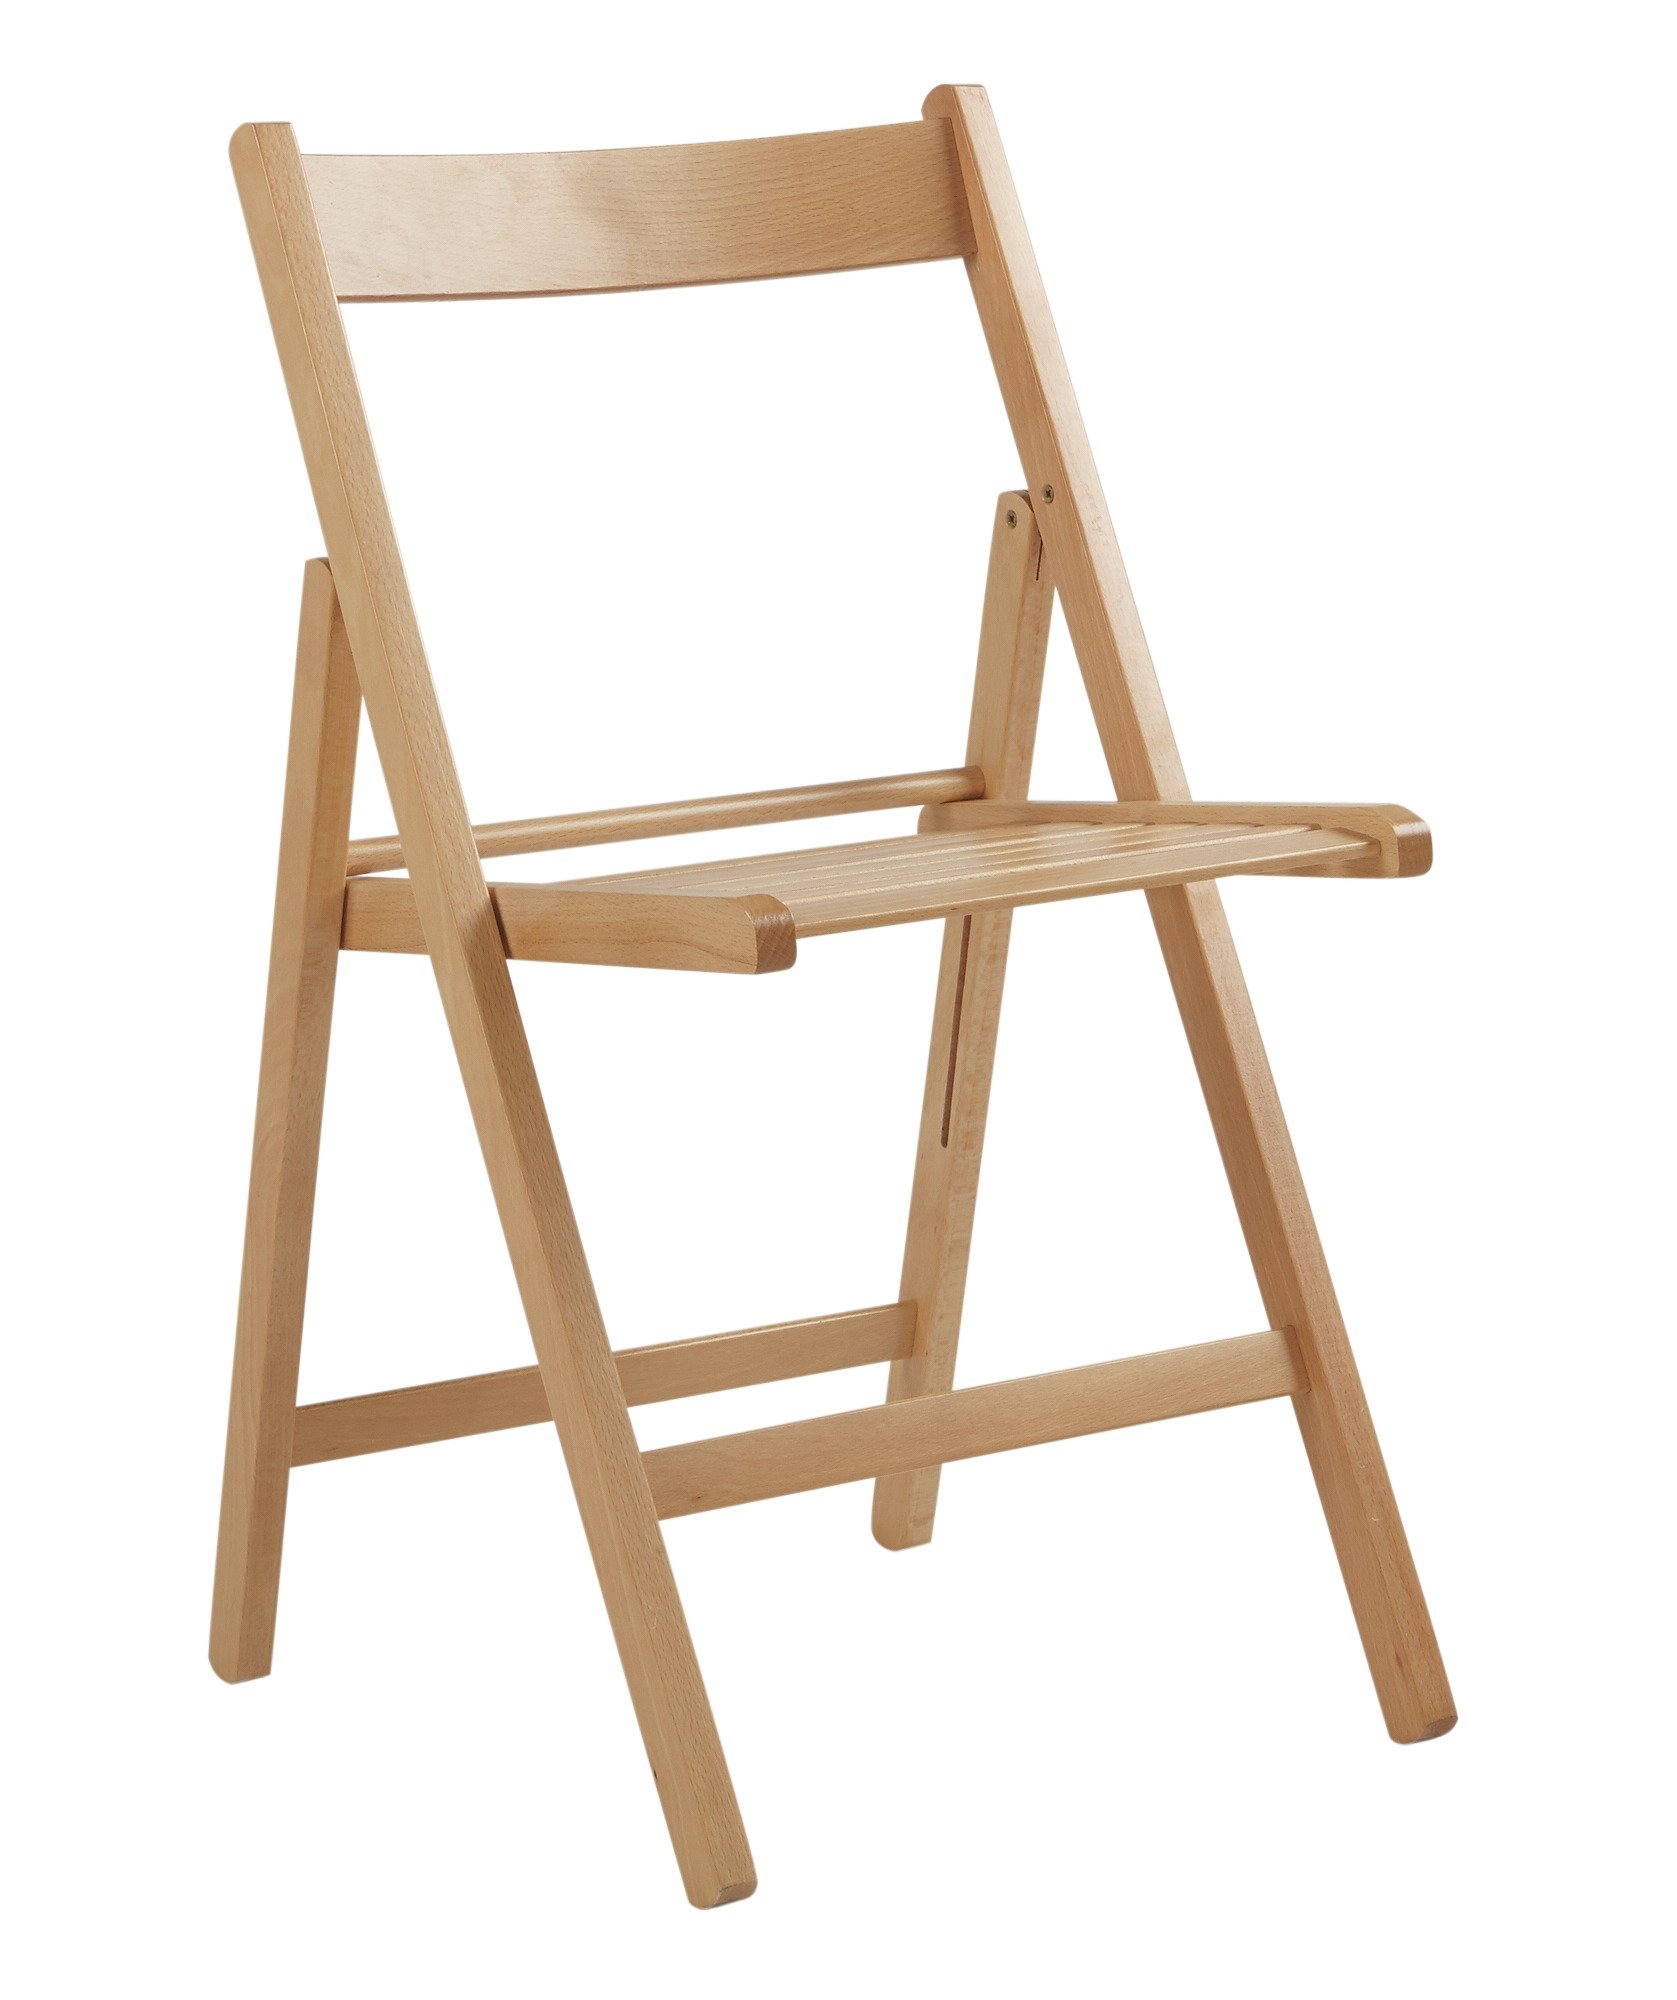 buy folding chairs